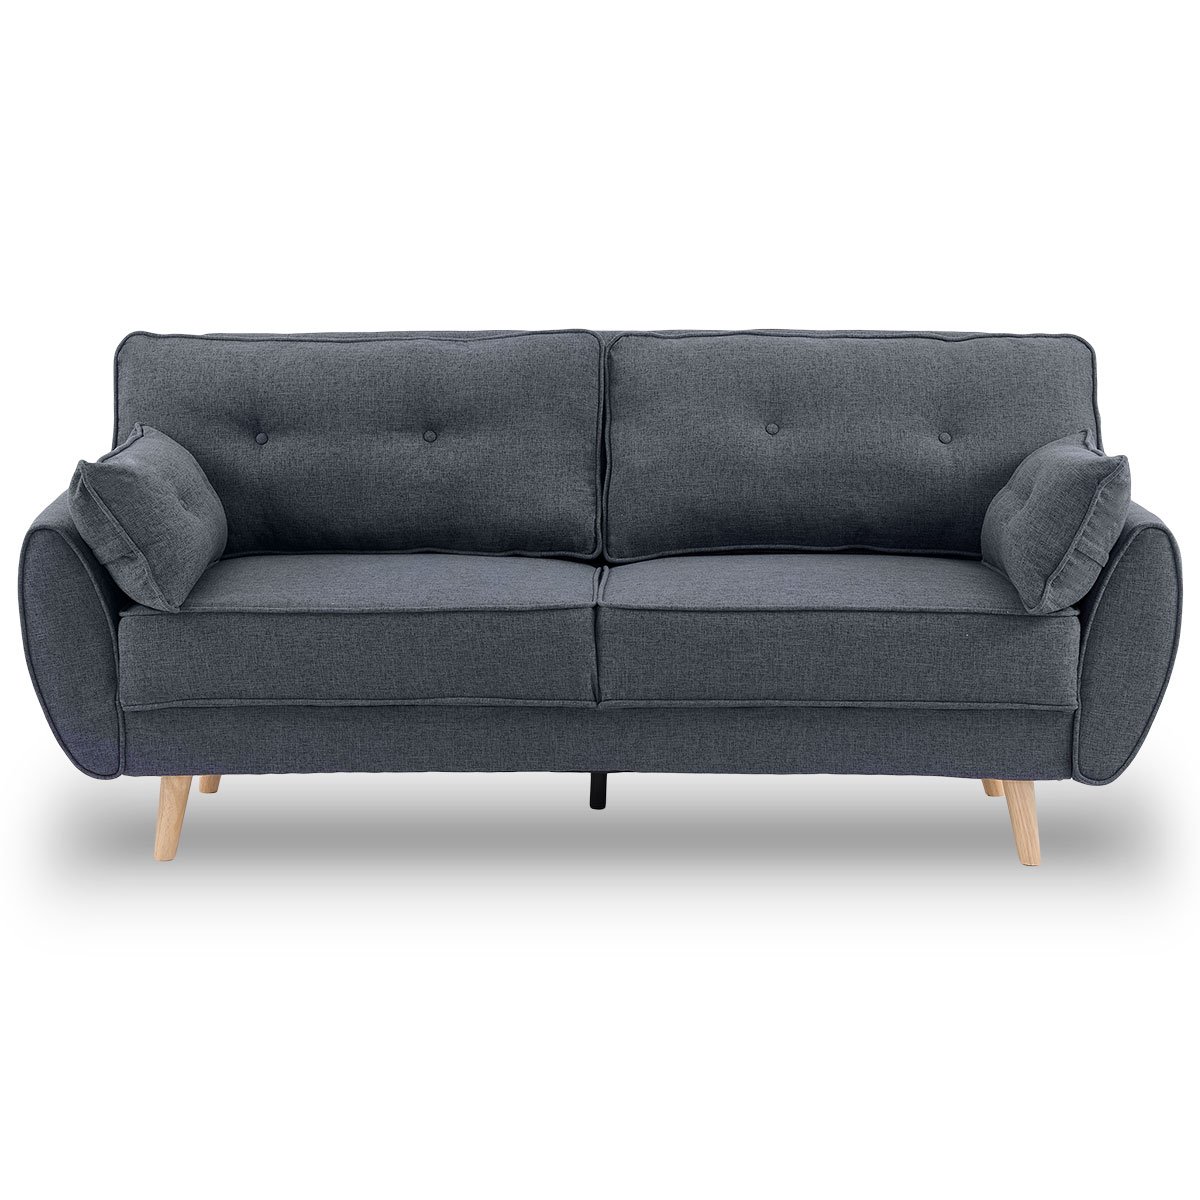 Sarantino 3 Seater Modular Linen Fabric Wood Sofa Bed Couch- Dark Grey 1